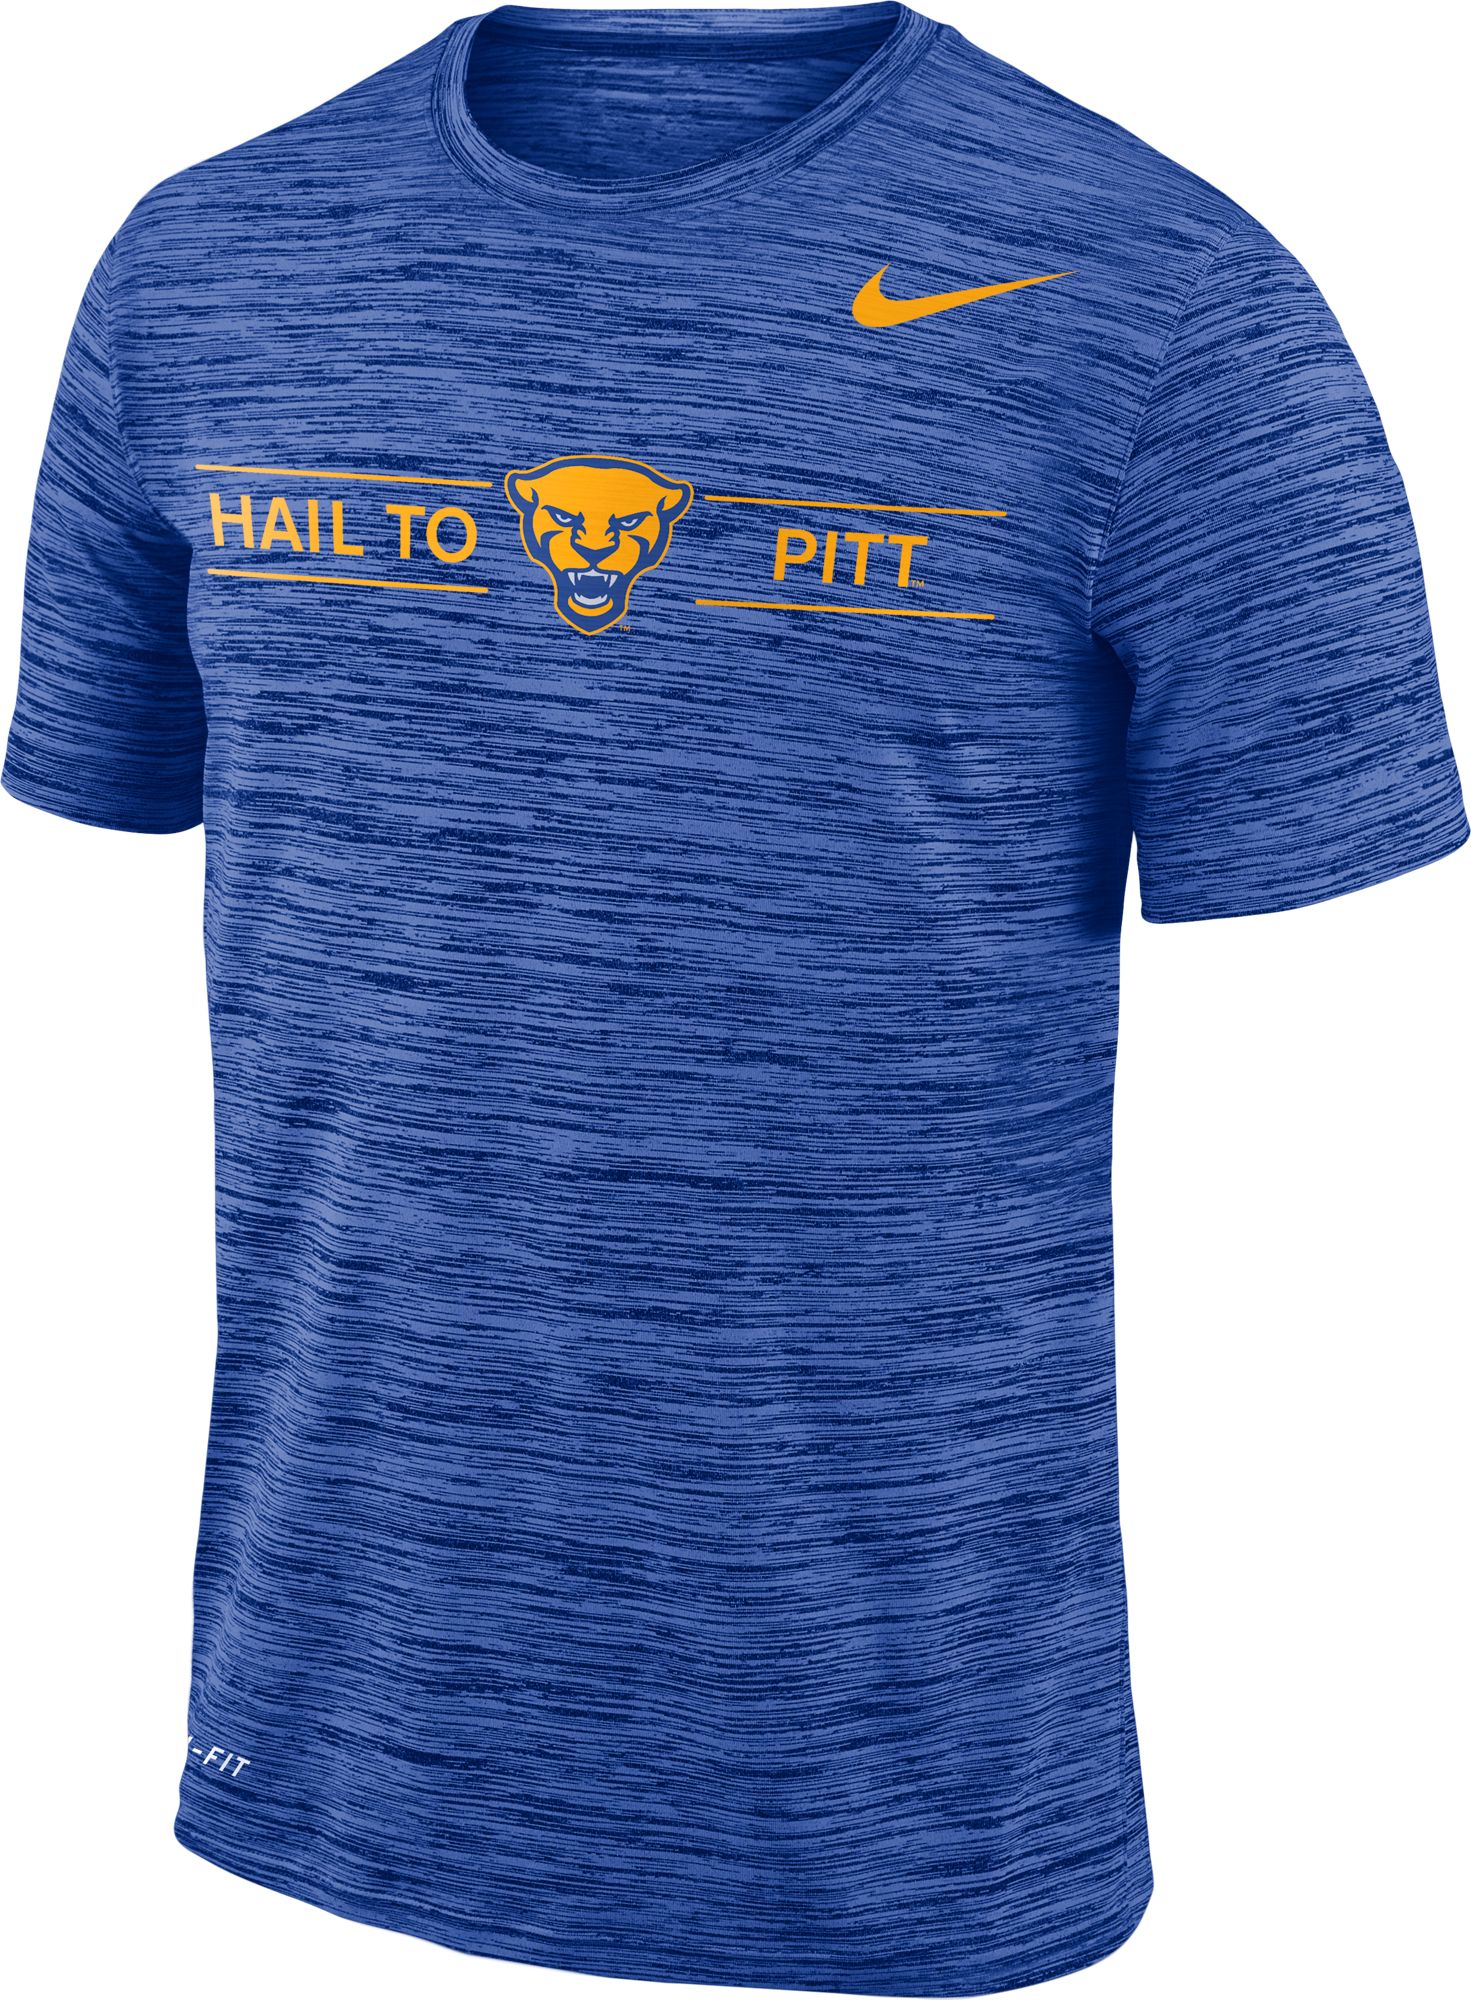 Nike Men's Pitt Panthers Blue Velocity 